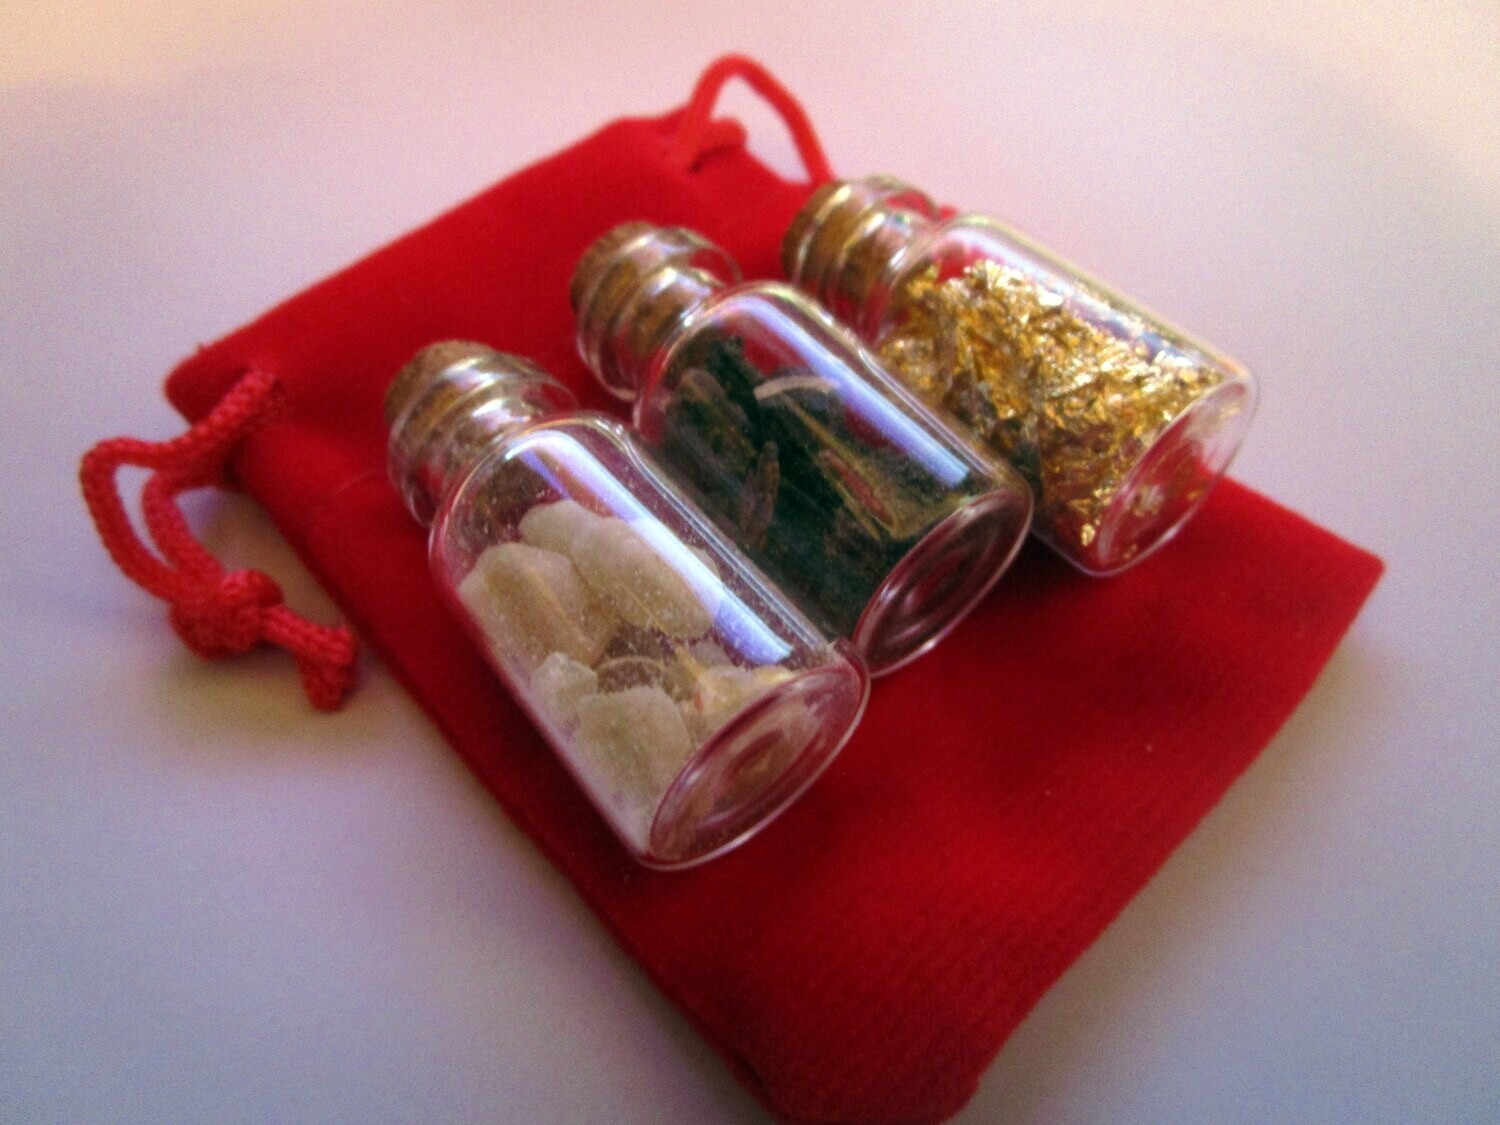 Gold, Frankincense, and Myrrh Set